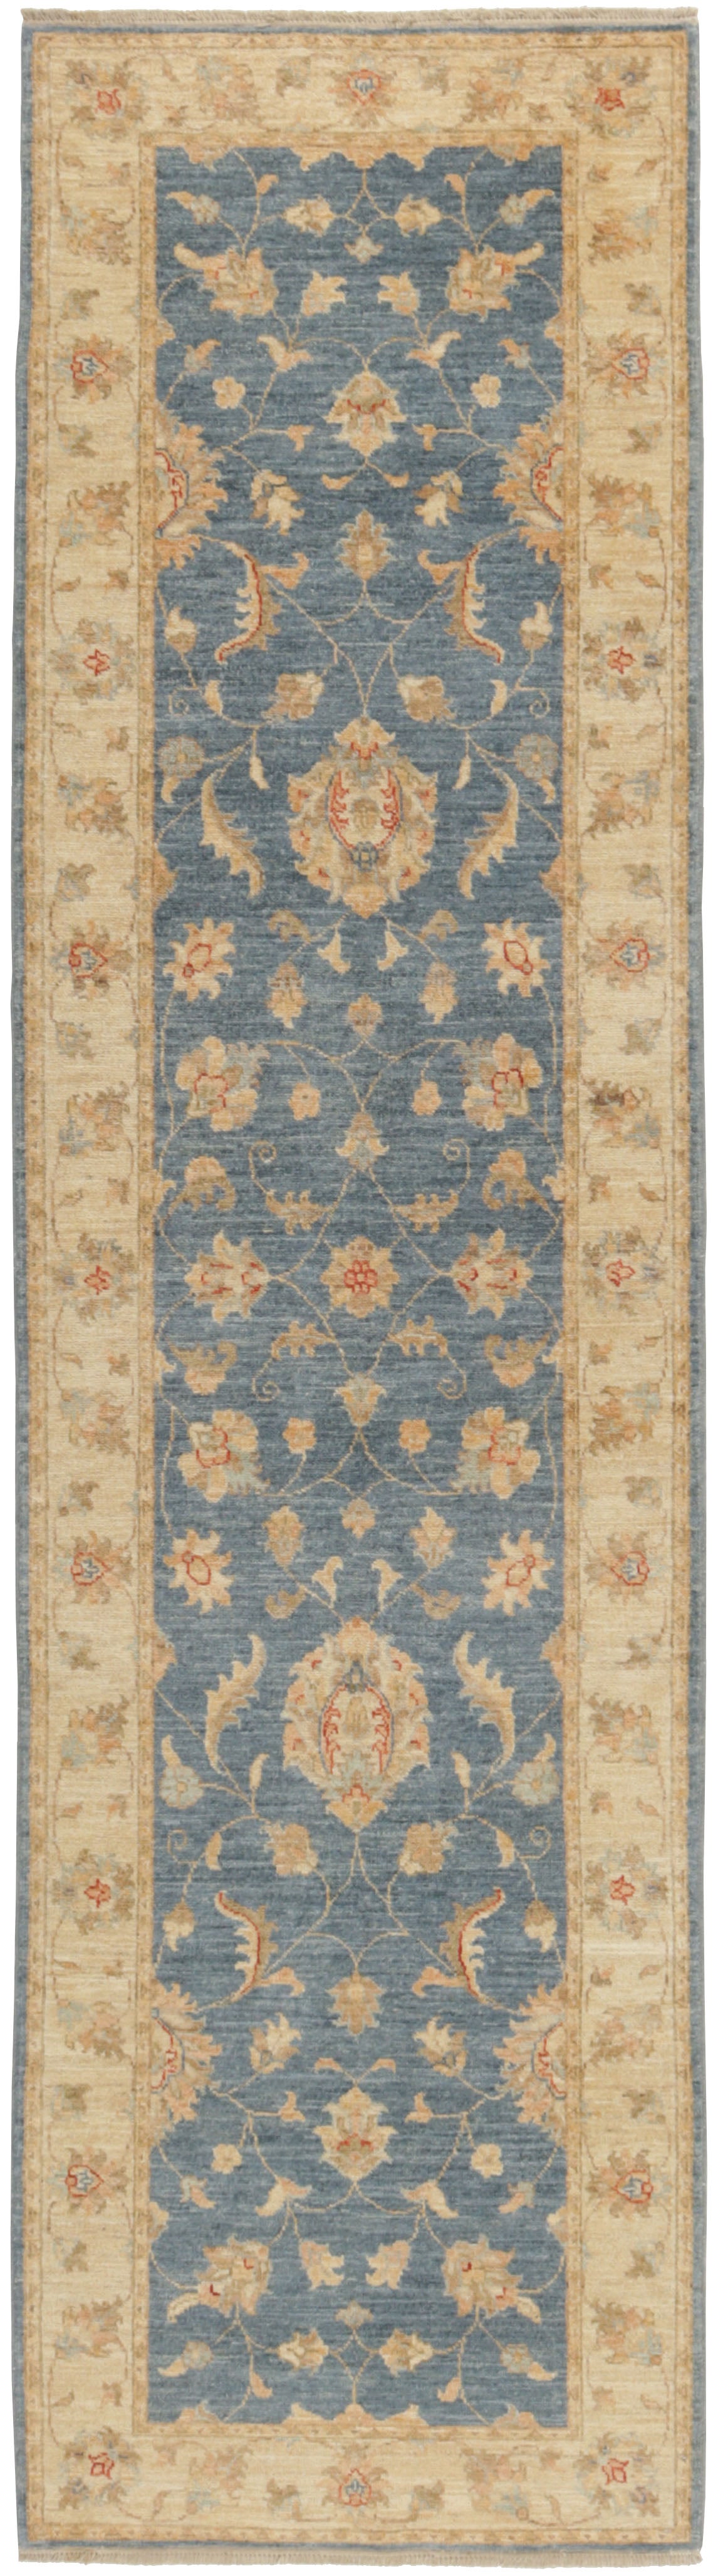 oriental rug with beige floral pattern